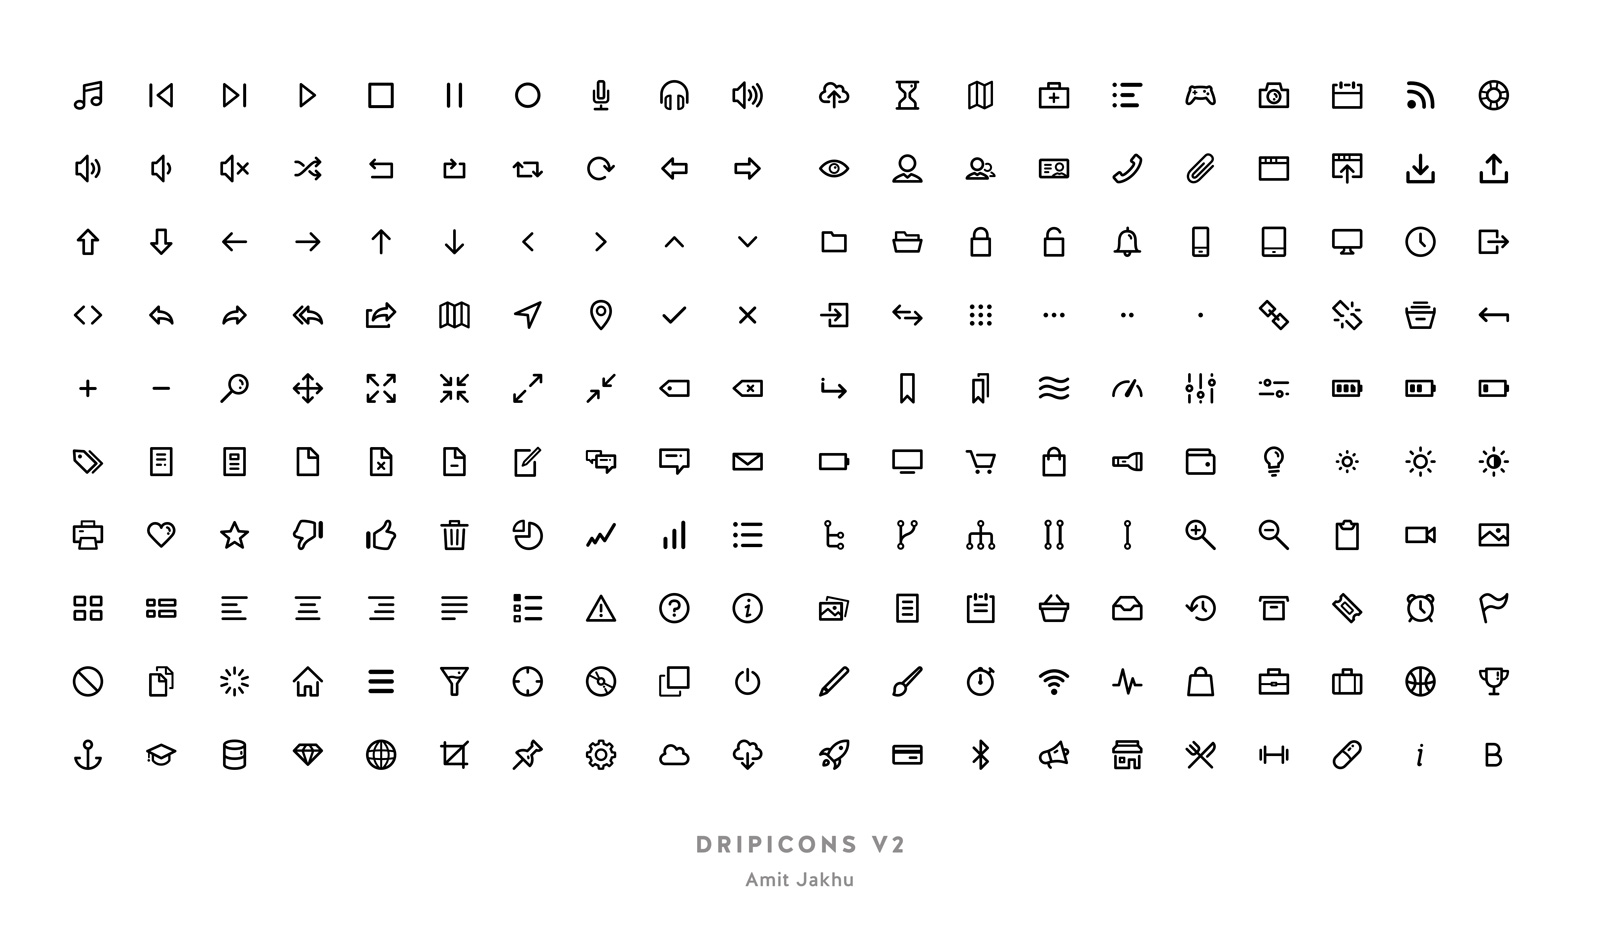 Dripicons V2 - 200 Icons